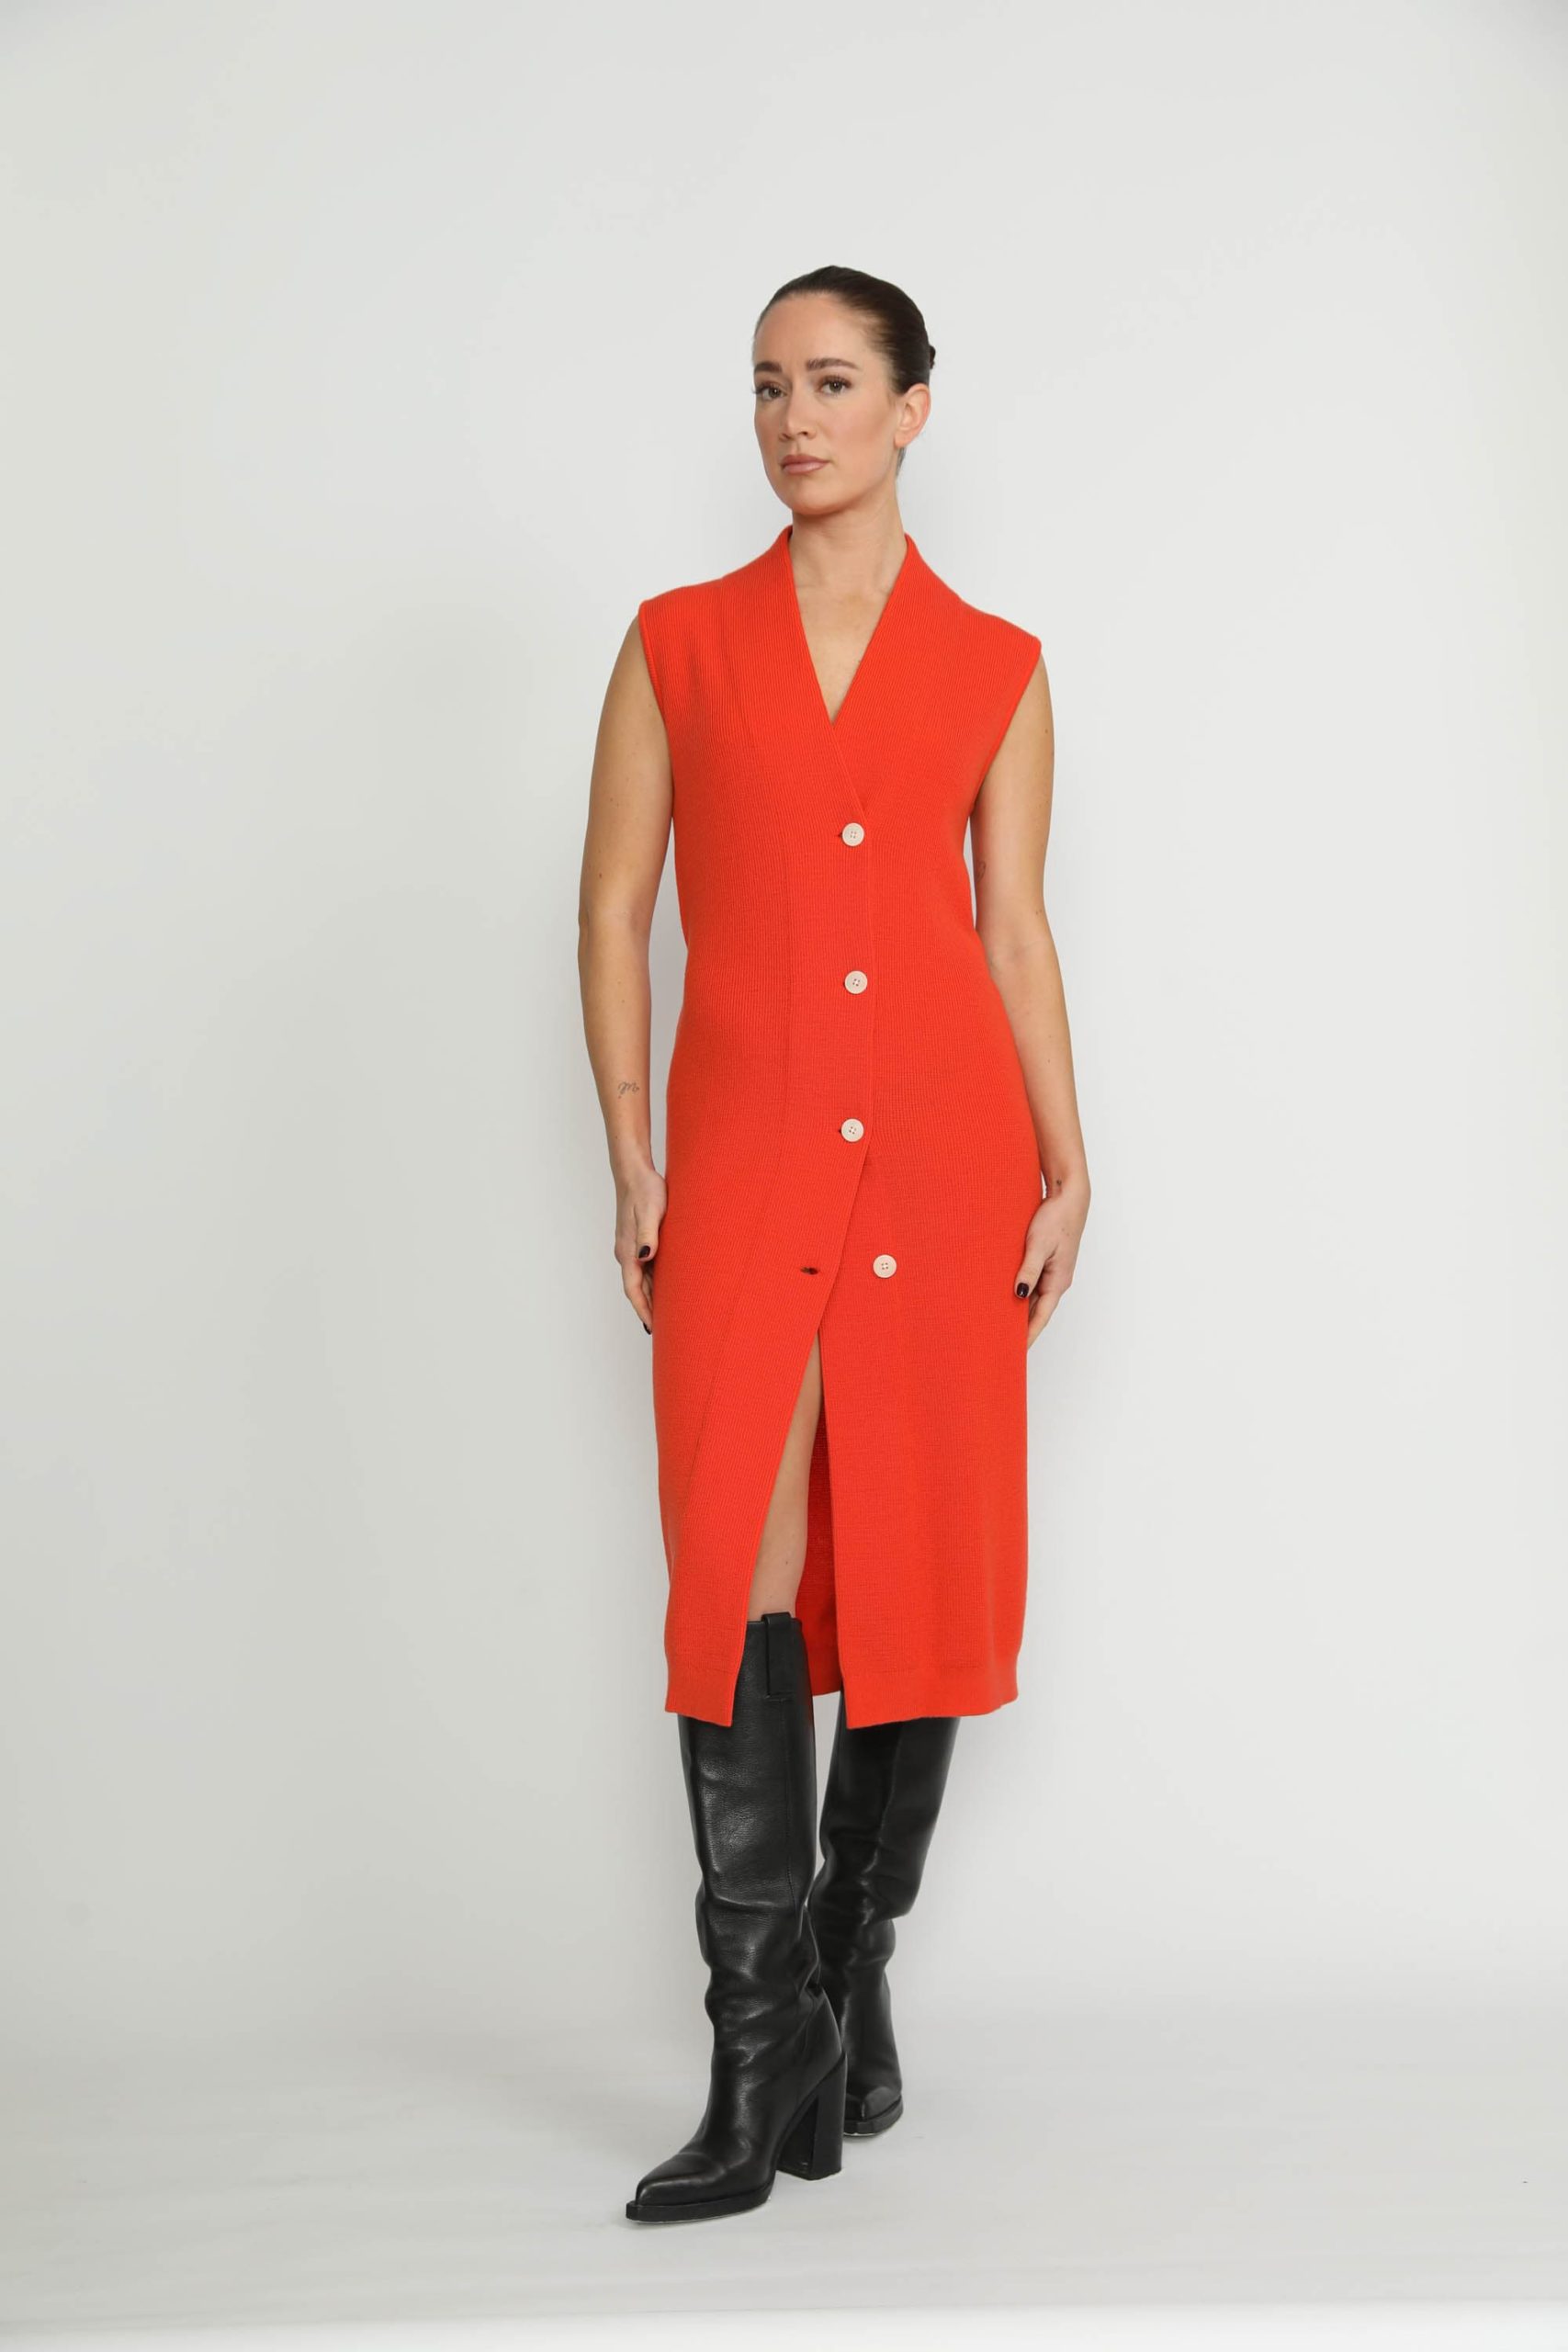 Arlesheim Dress – Arlesheim Orange Knit Dress